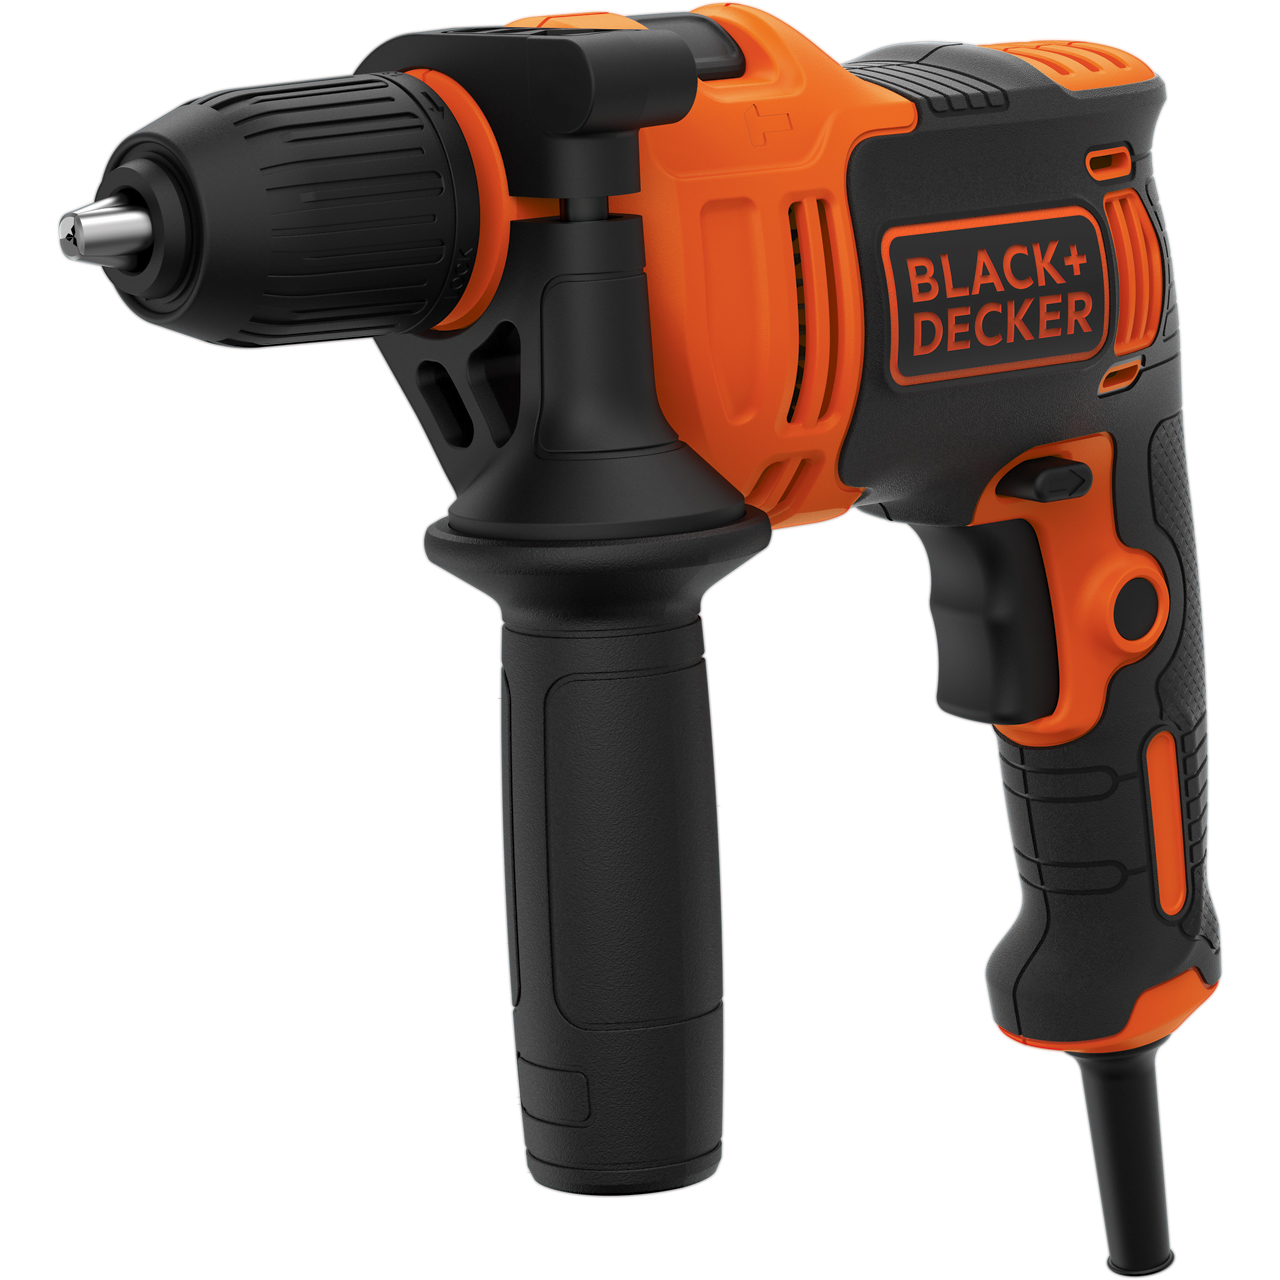 Black + Decker BEH550K-GB Hammer Drill Review